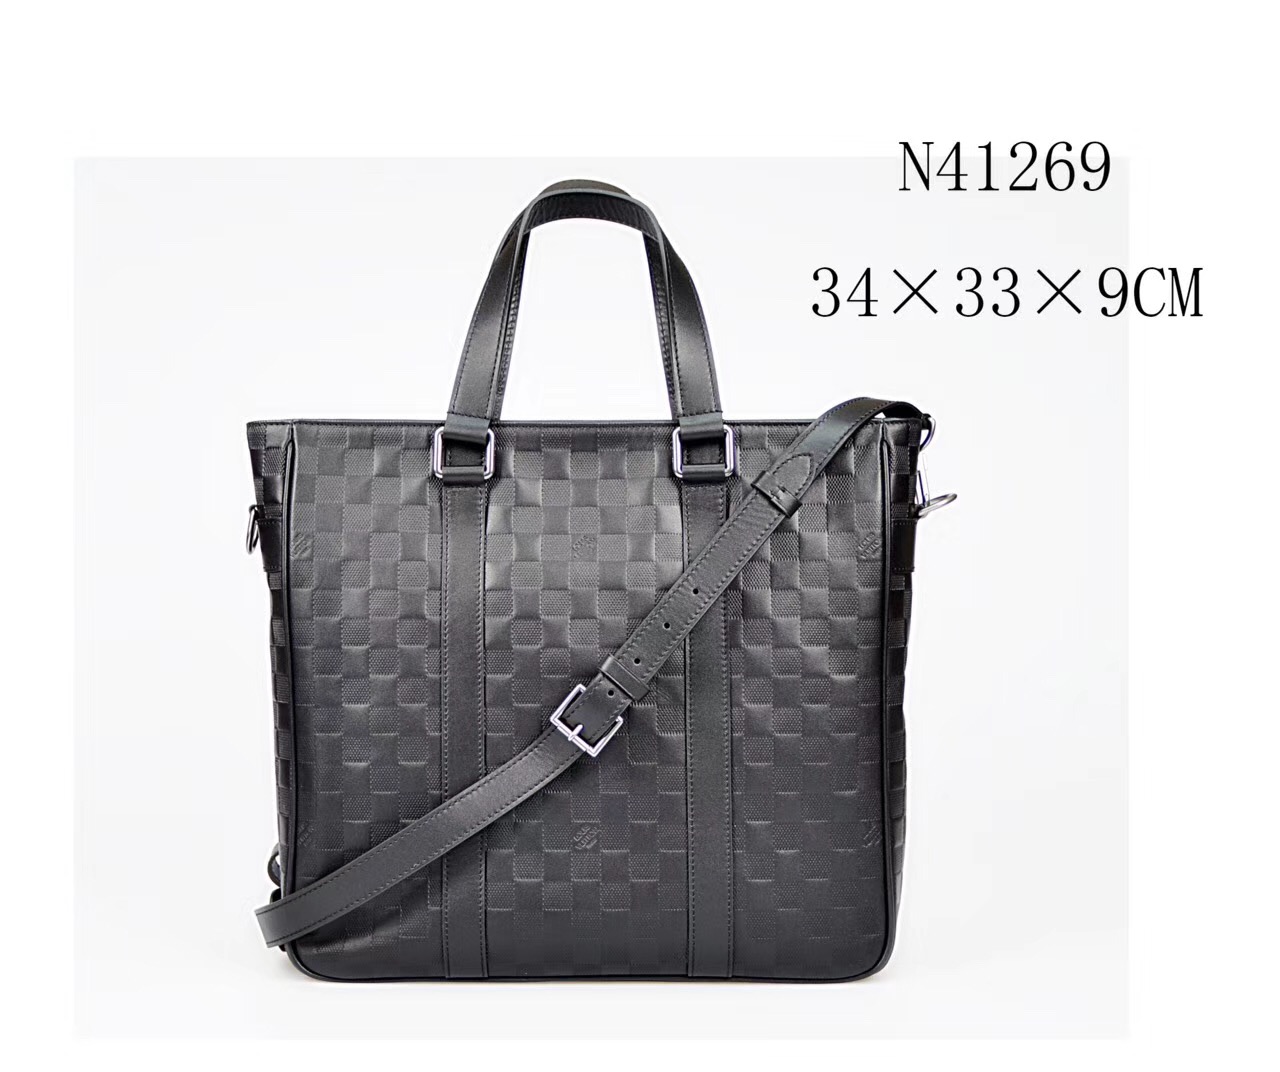 Men Lv Louis Vuitton Damier Tote Leather Handbags N41269 Bags